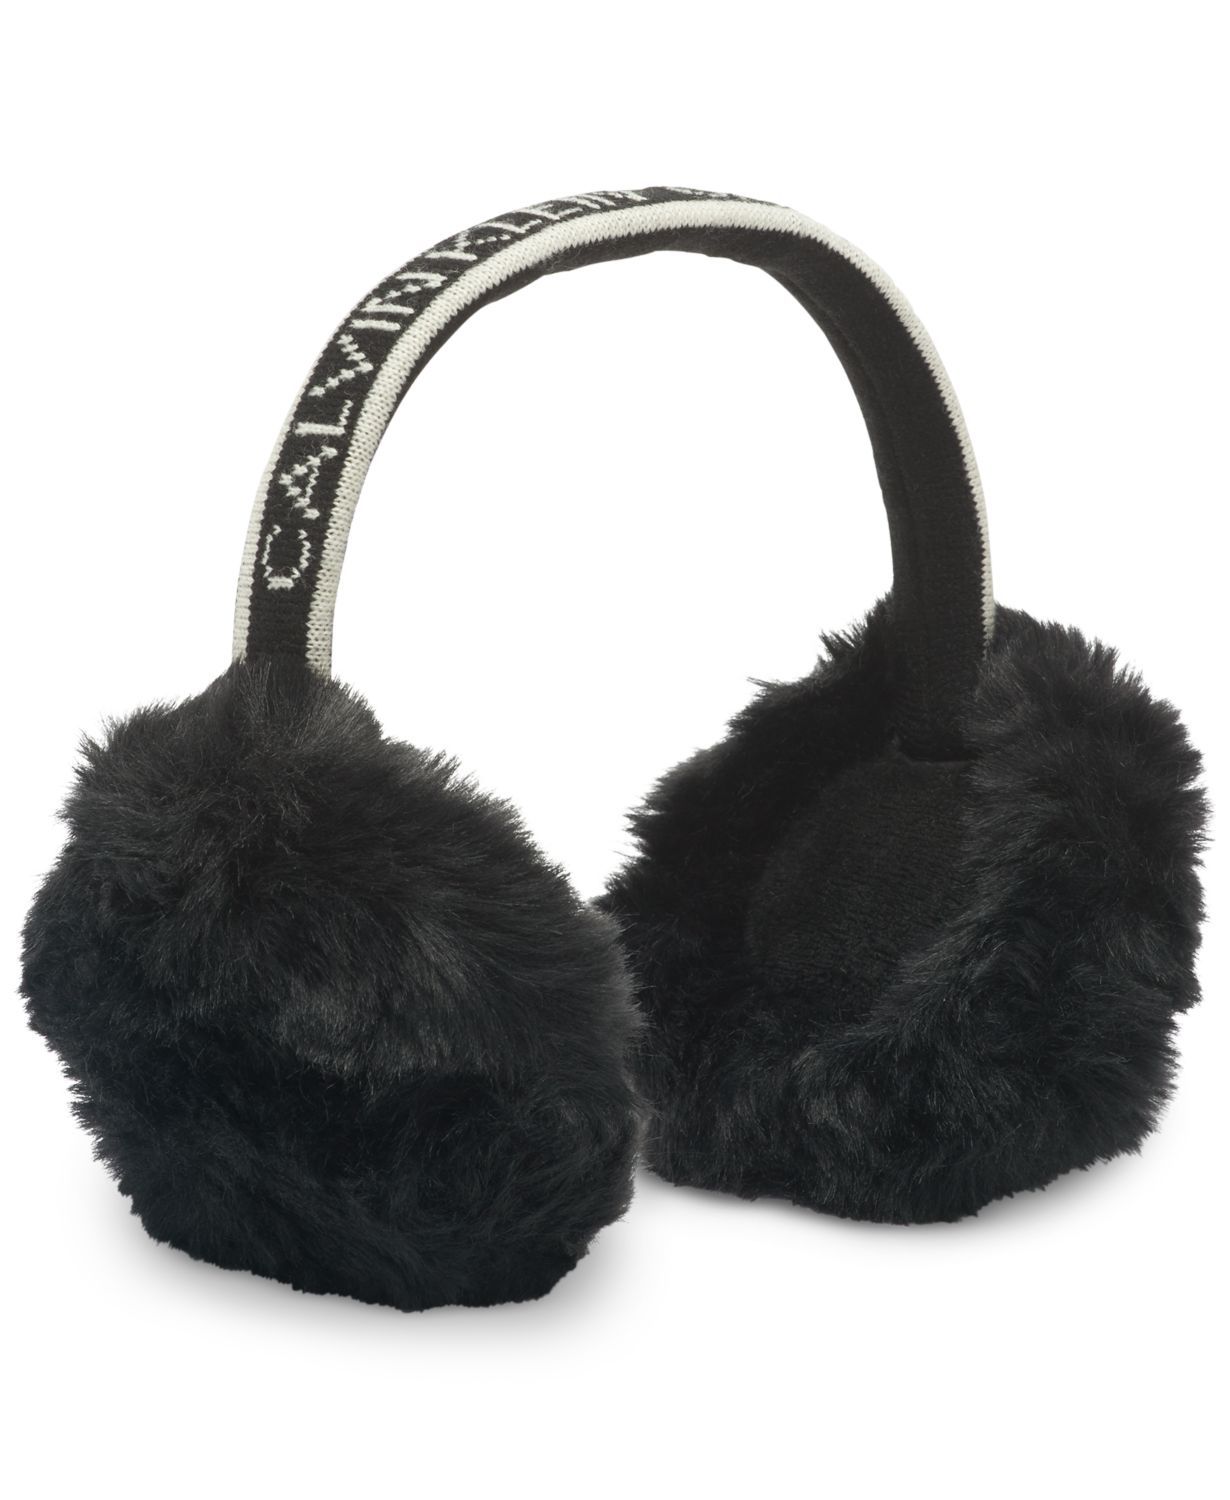 HA189 Ladies/Womens Warm Winter Ear Muffs 